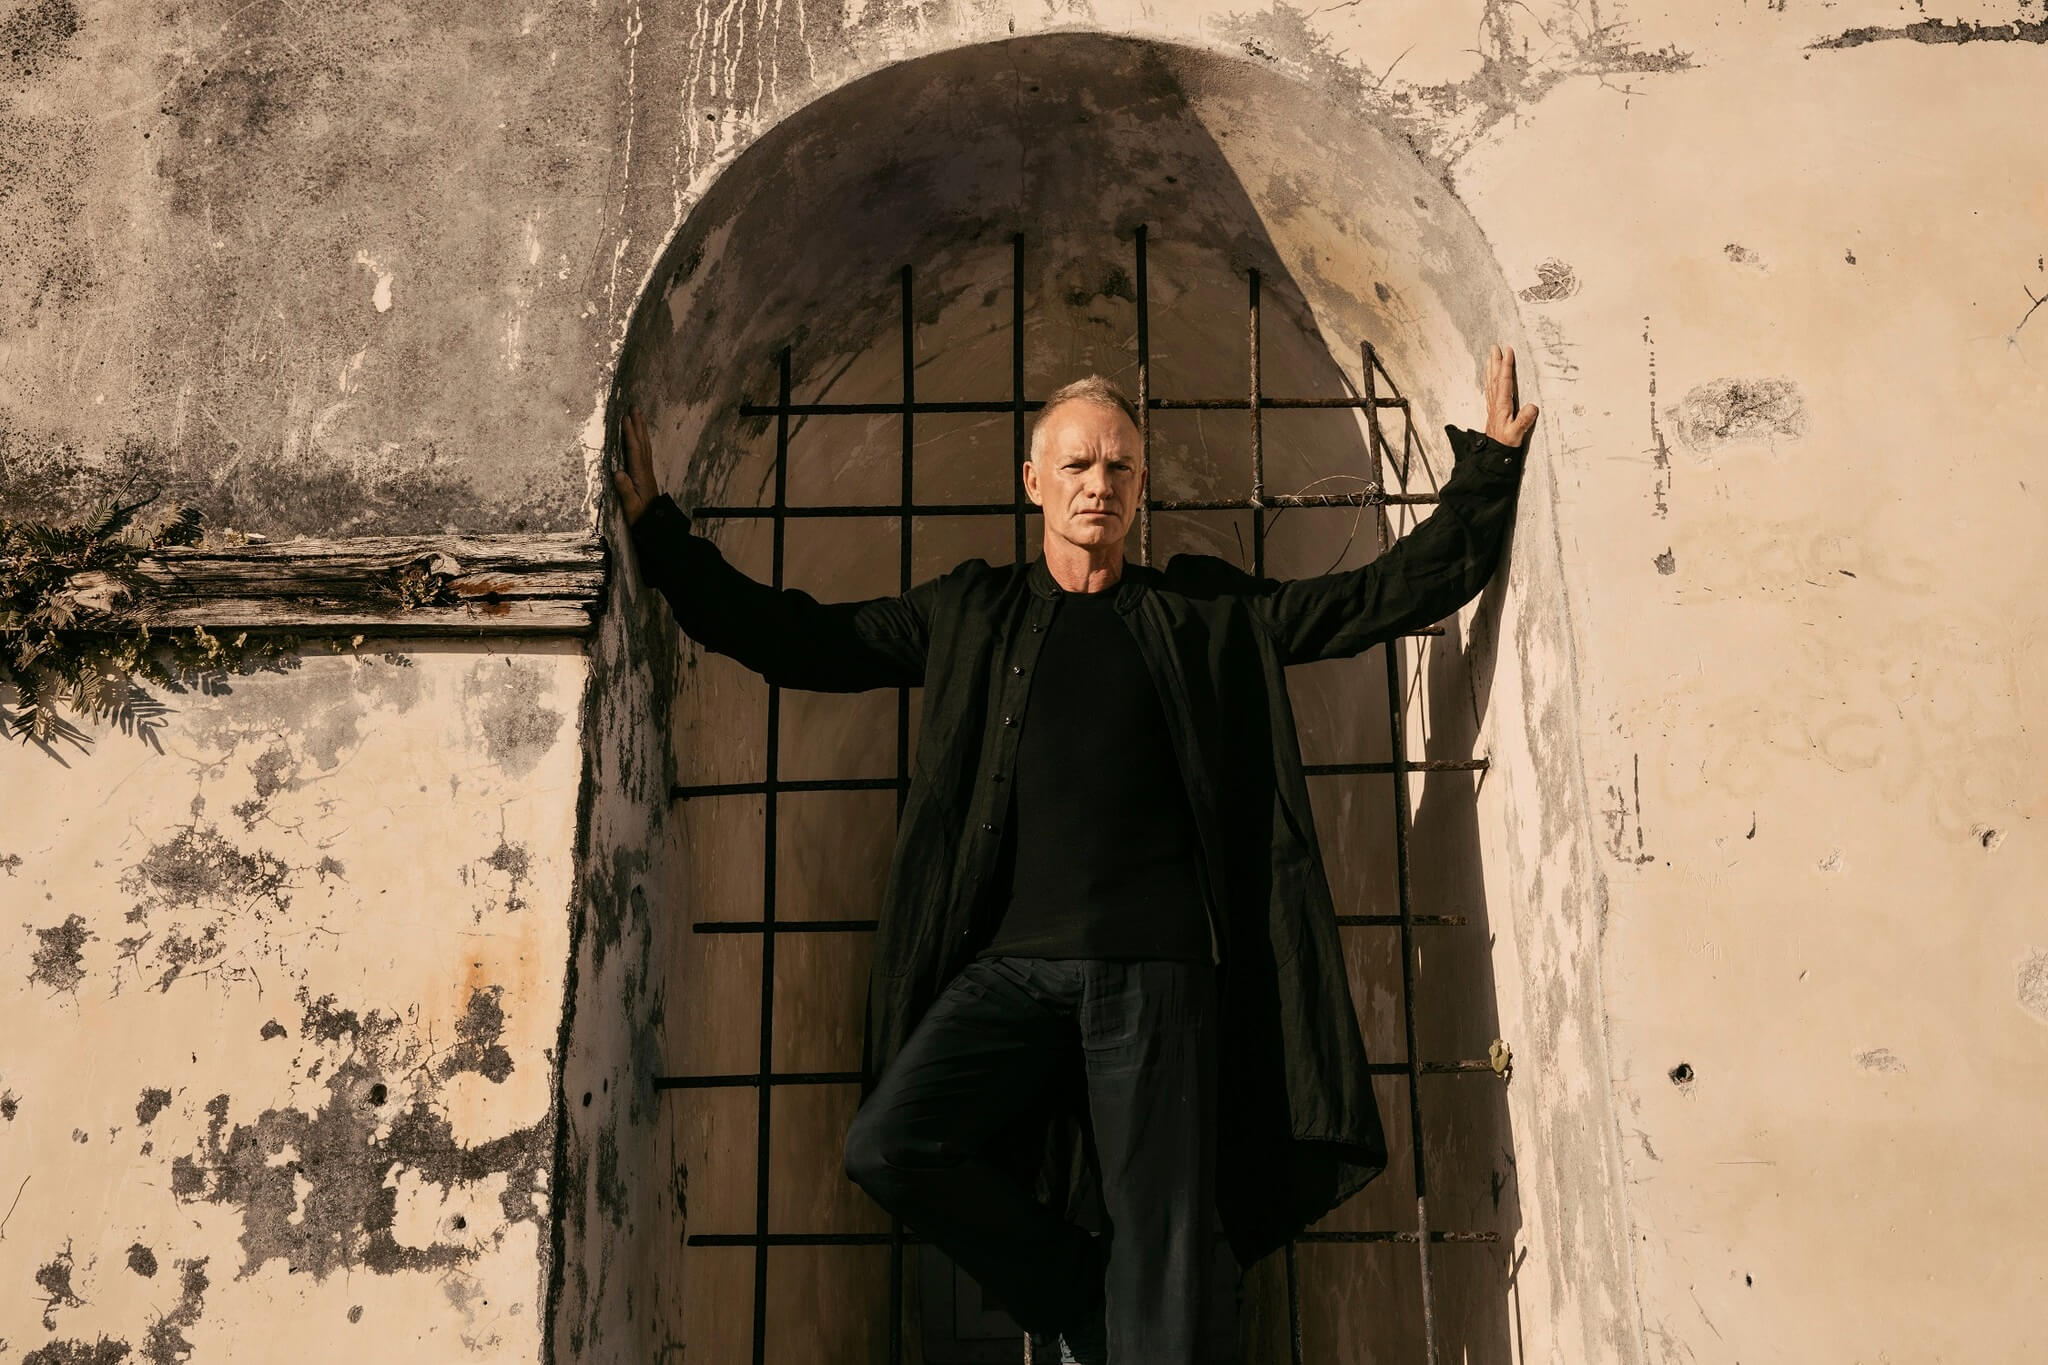 Stingが11月発売の新作『The Bridge』から新曲「Rushing Water」のミュージック・ビデオも公開